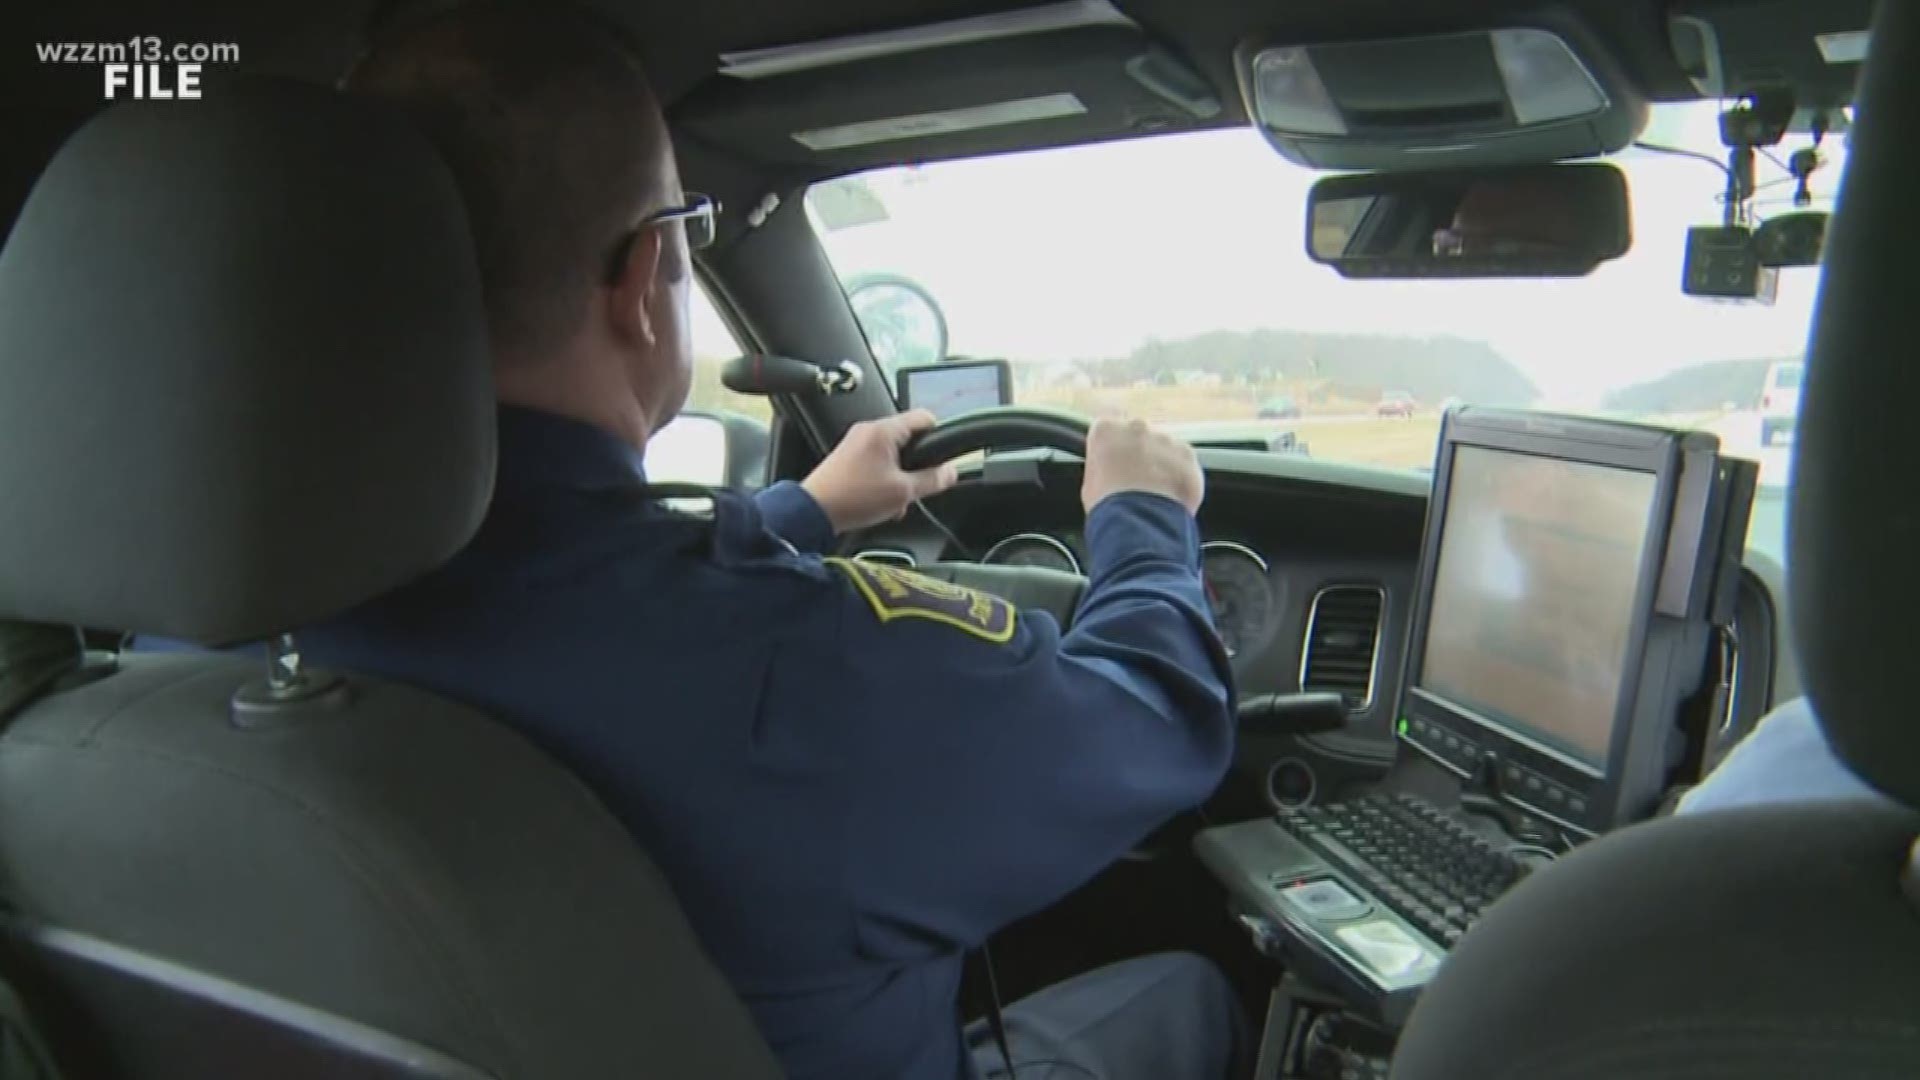 State Police Expand Roadside Drug Testing